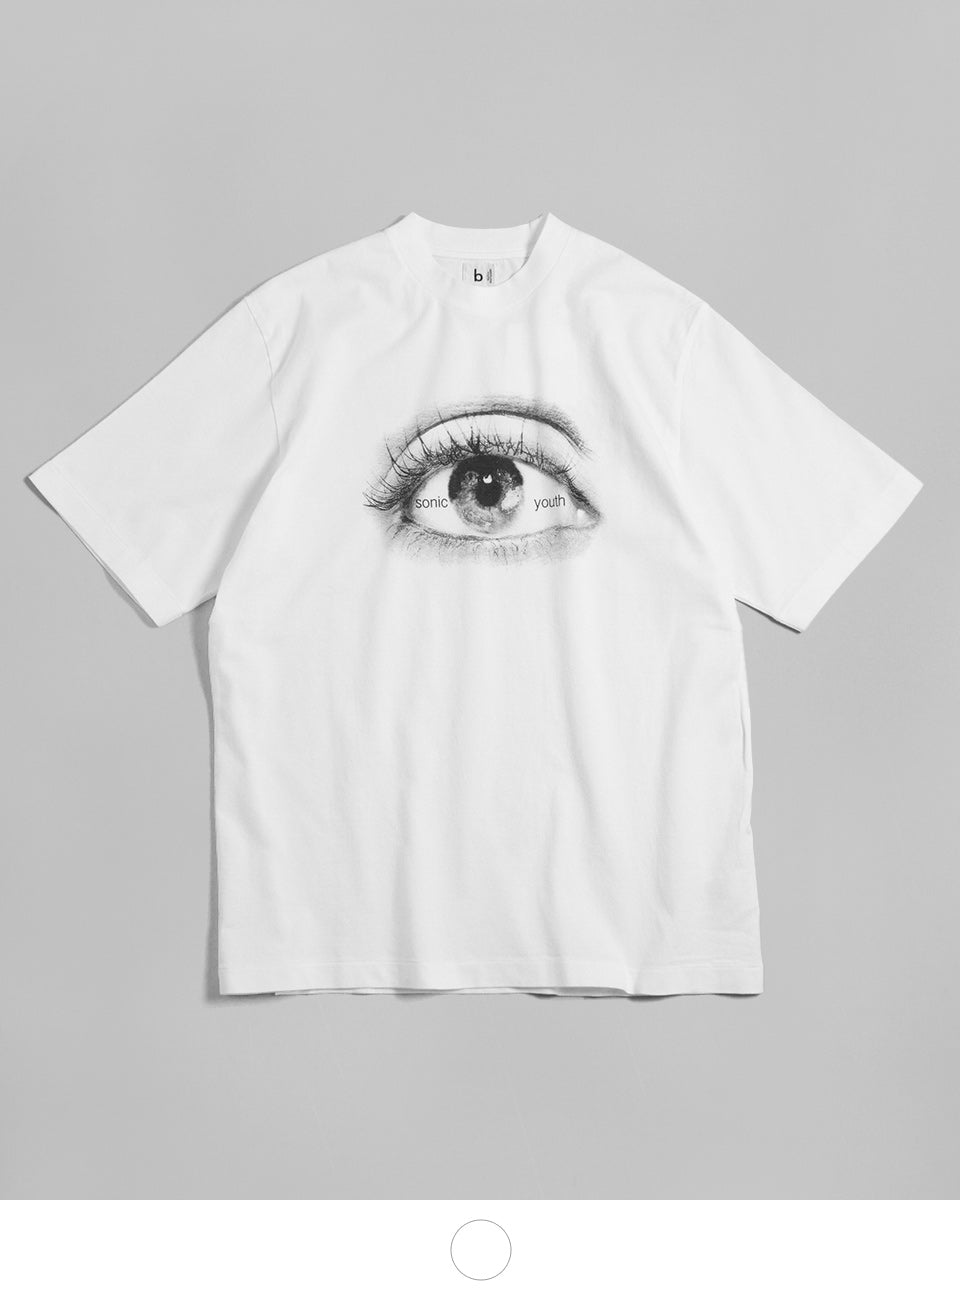 blurhms ROOTSTOCK ブラームス ルーツストックプリント Tシャツ eye Print Tee STANDARD【送料無料】正規取扱店【お一人様、1点ずつまで】